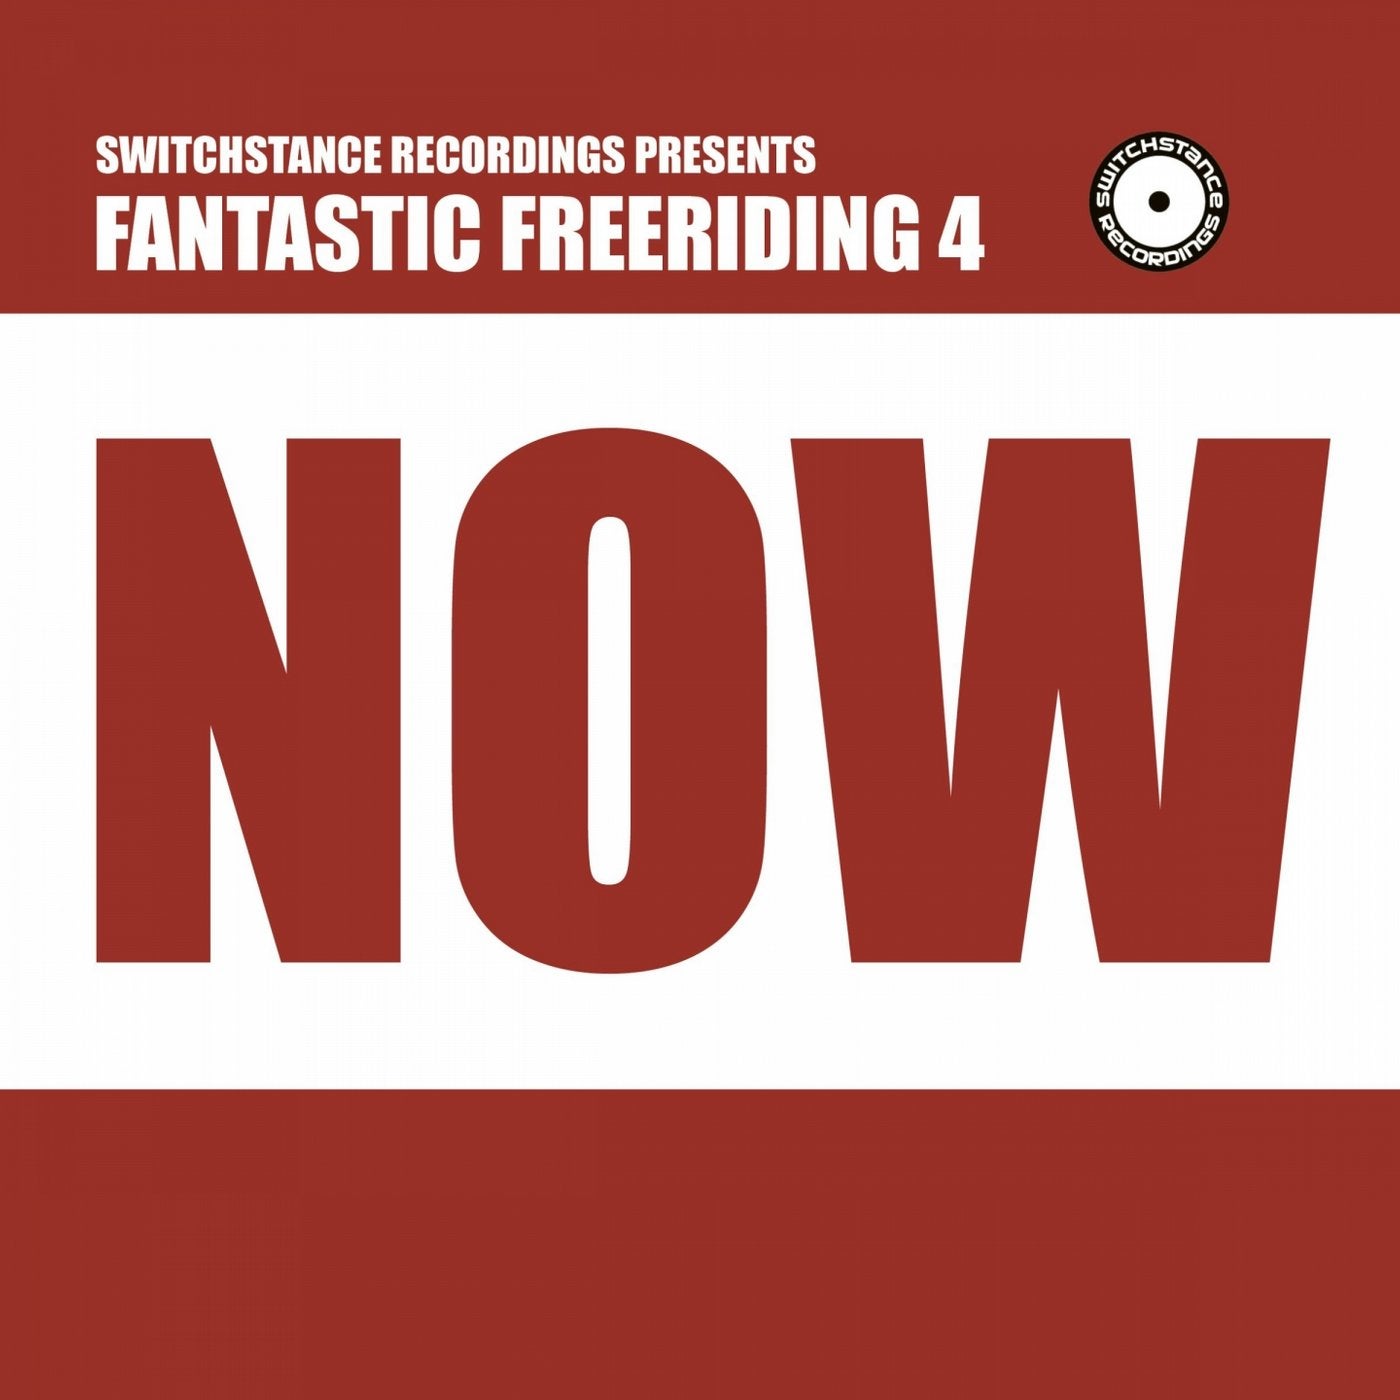 Fantastic Freeriding 4 - Now